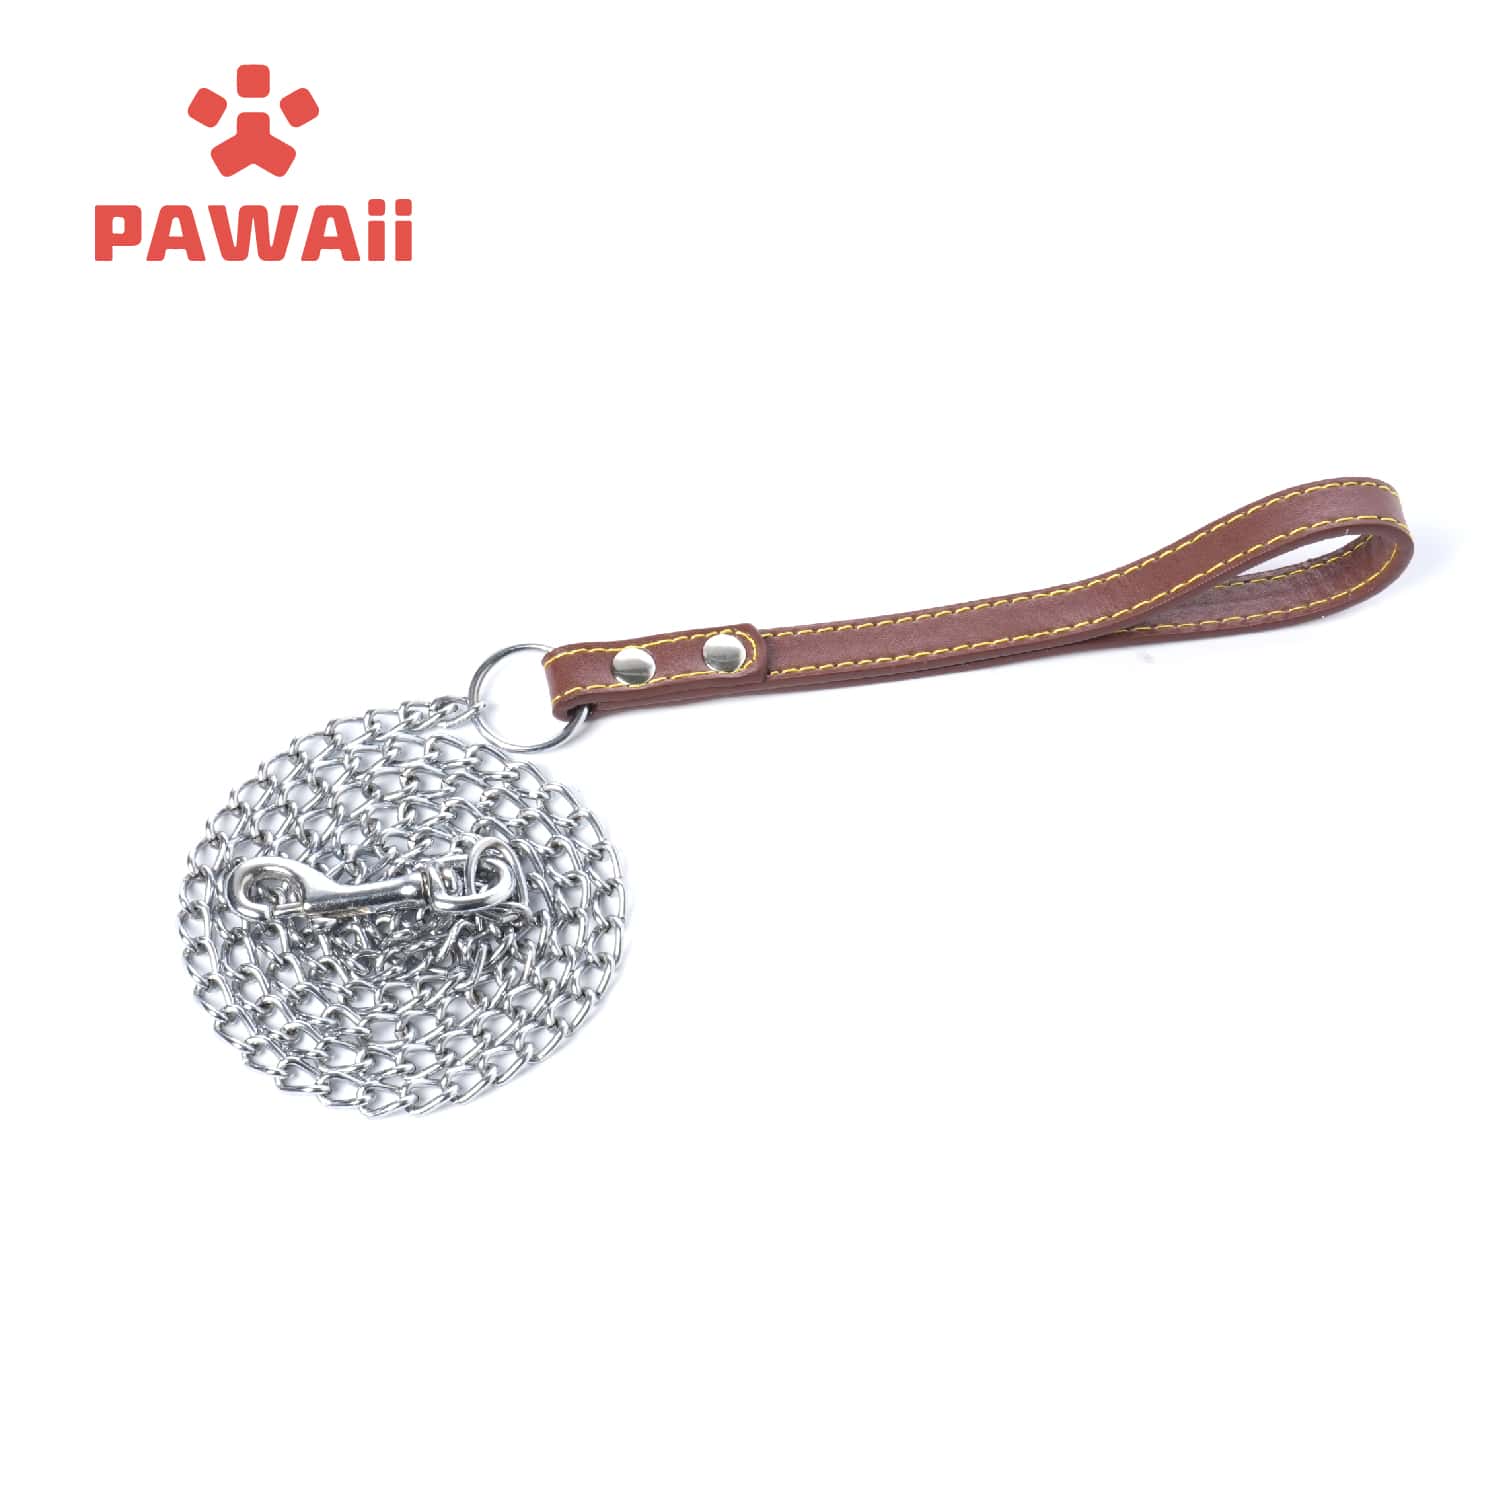 PAWAii Metal Leash for Dogs